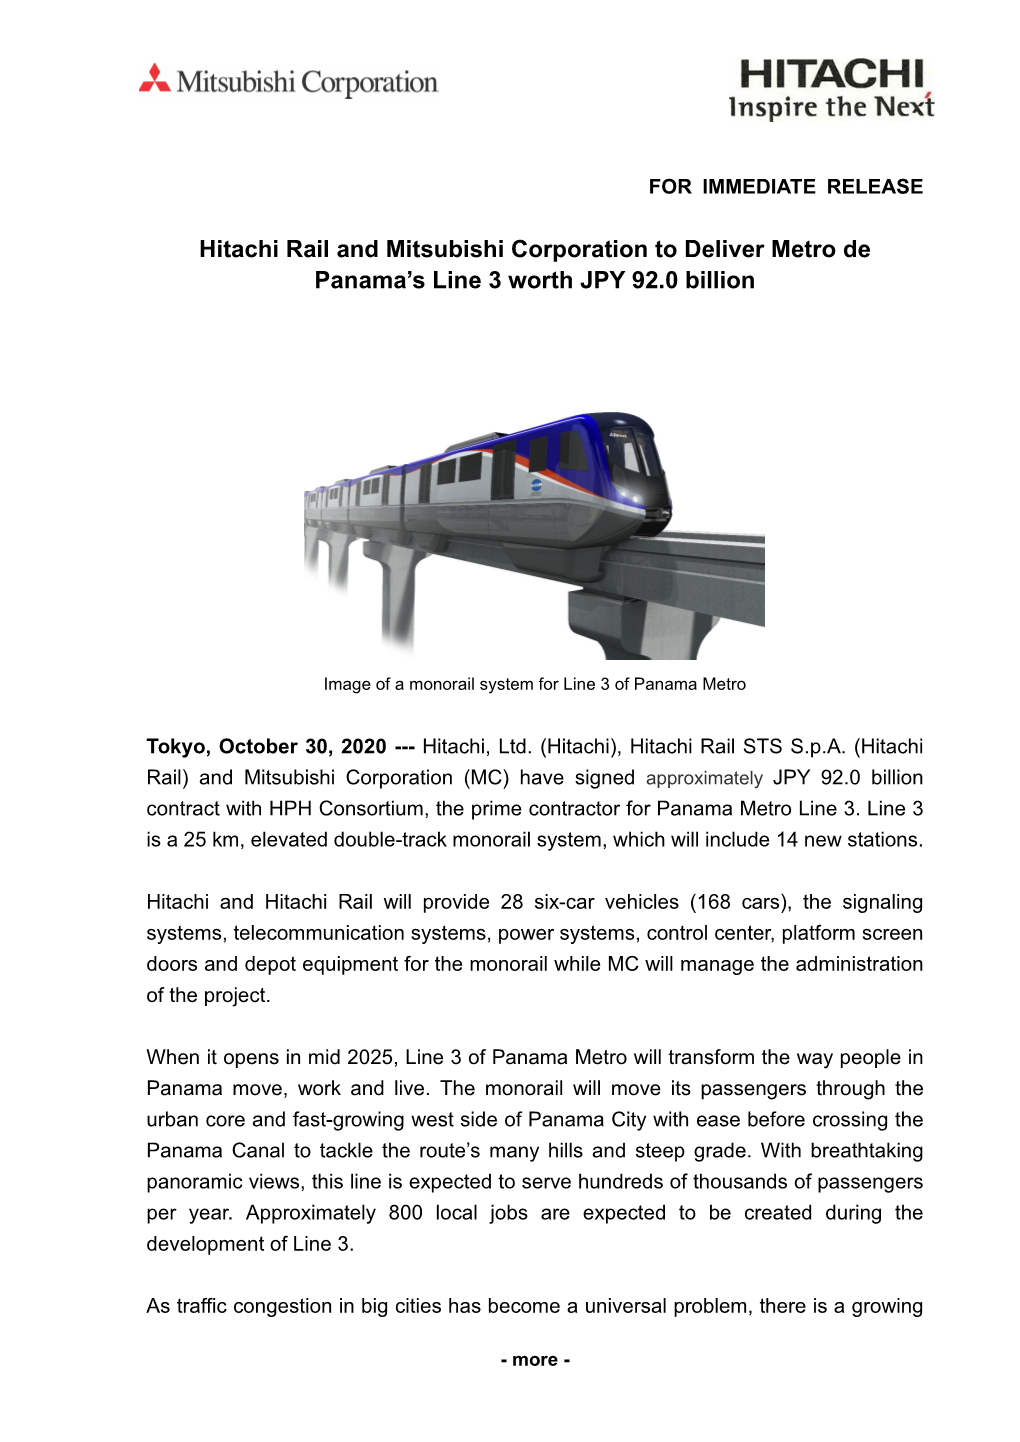 Hitachi Rail and Mitsubishi Corporation to Deliver Metro De Panama’S Line 3 Worth JPY 92.0 Billion